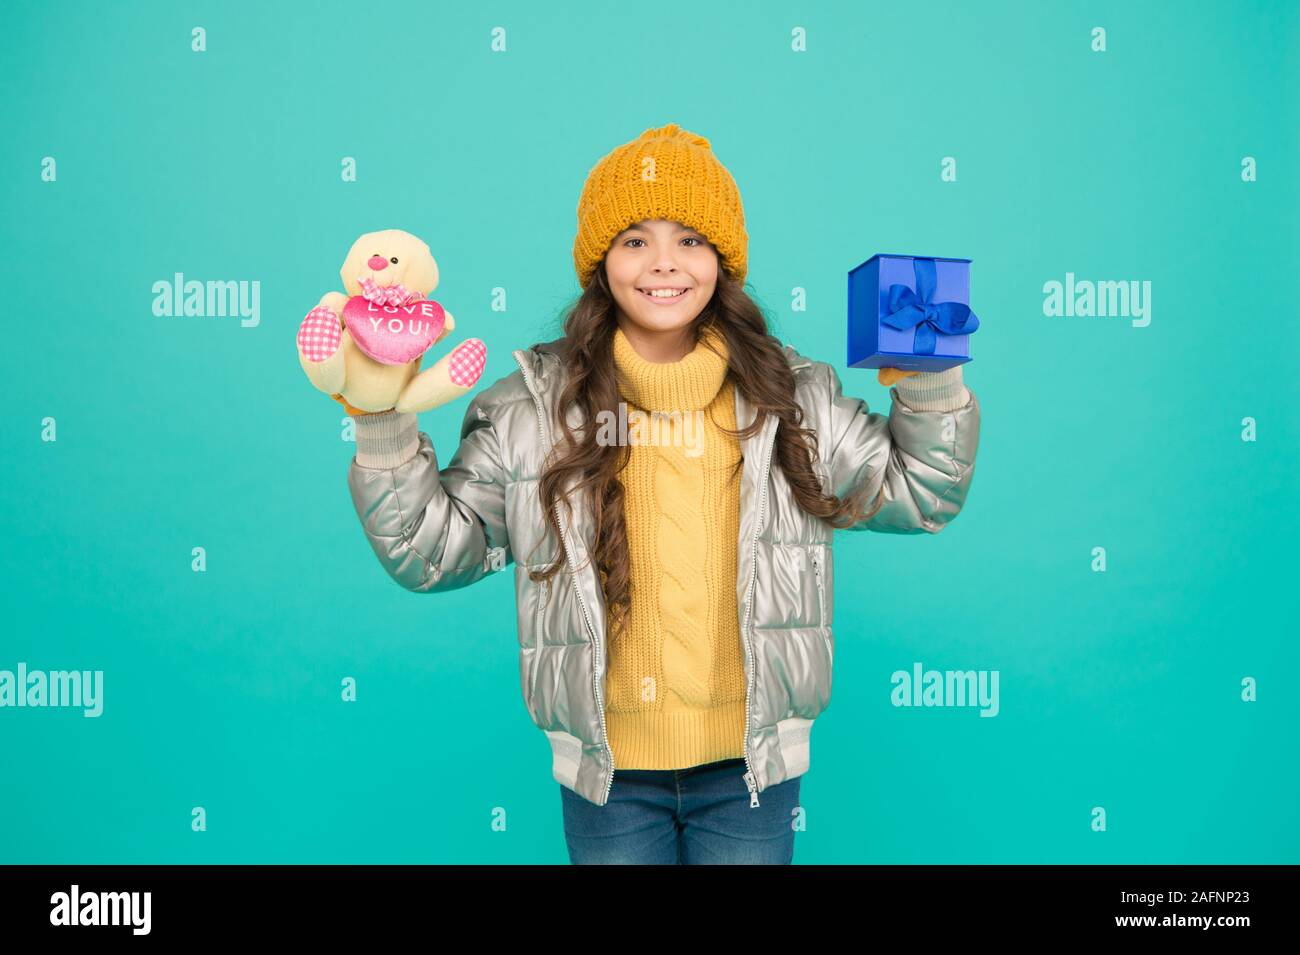 Regali Di Natale Accordi.Christmas Shopping Kids Childhood Immagini E Fotos Stock Alamy